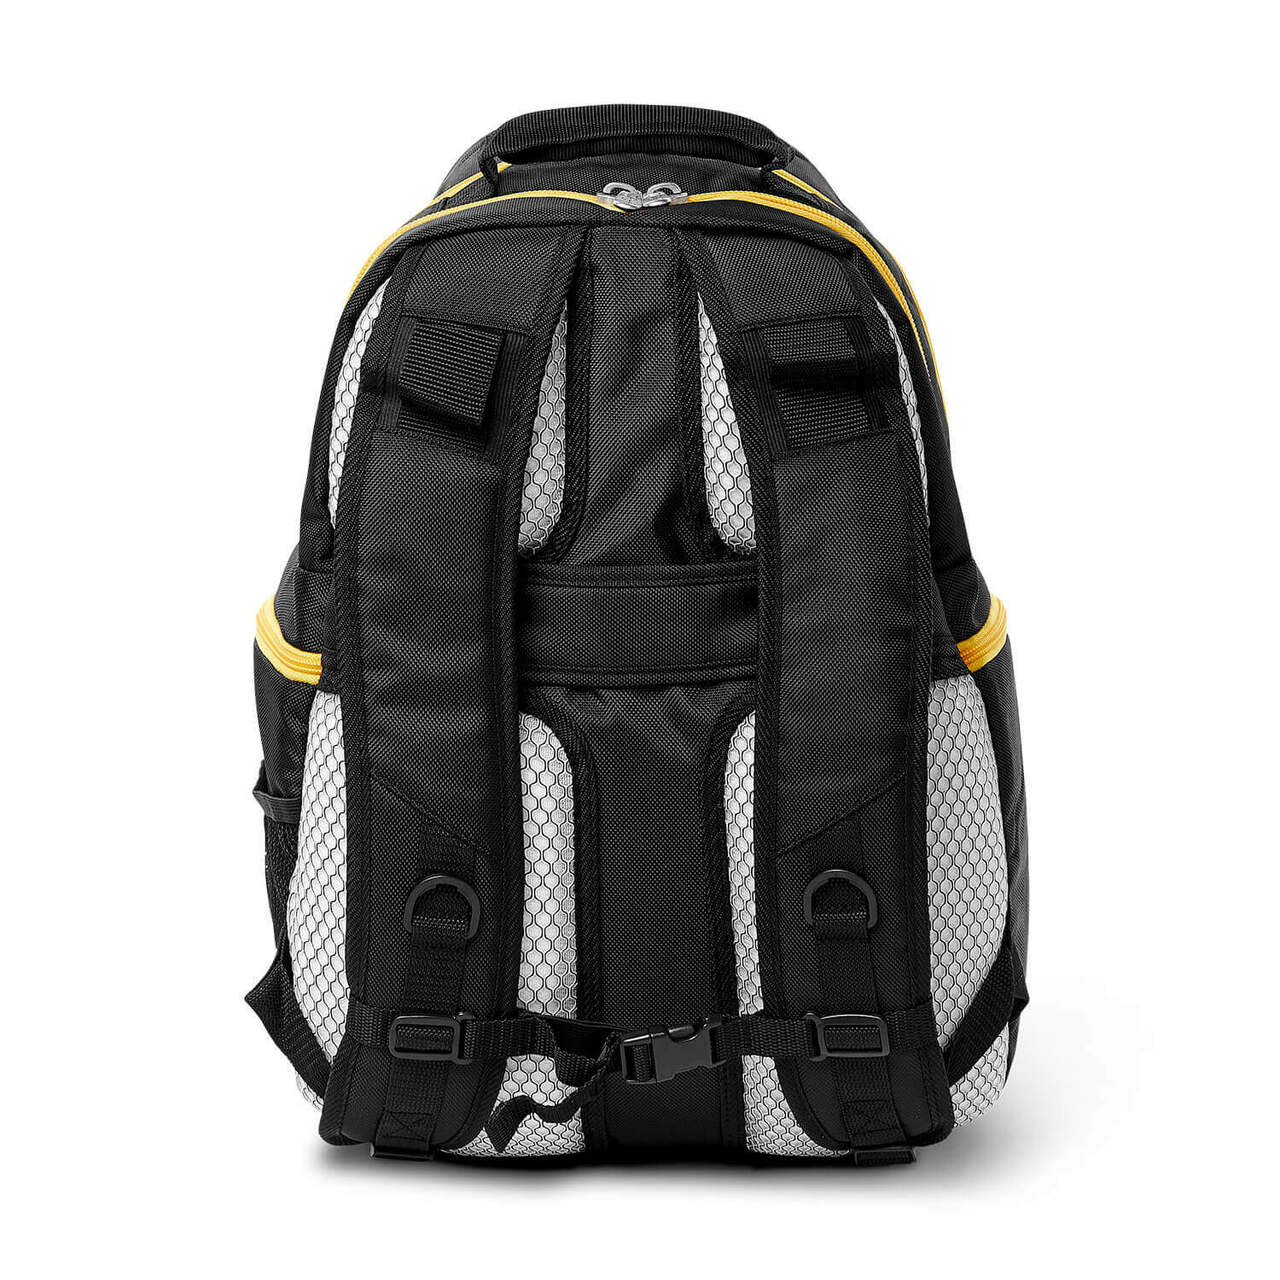 Minnesota Vikings 2 Piece Premium Colored Trim Backpack and Luggage Set